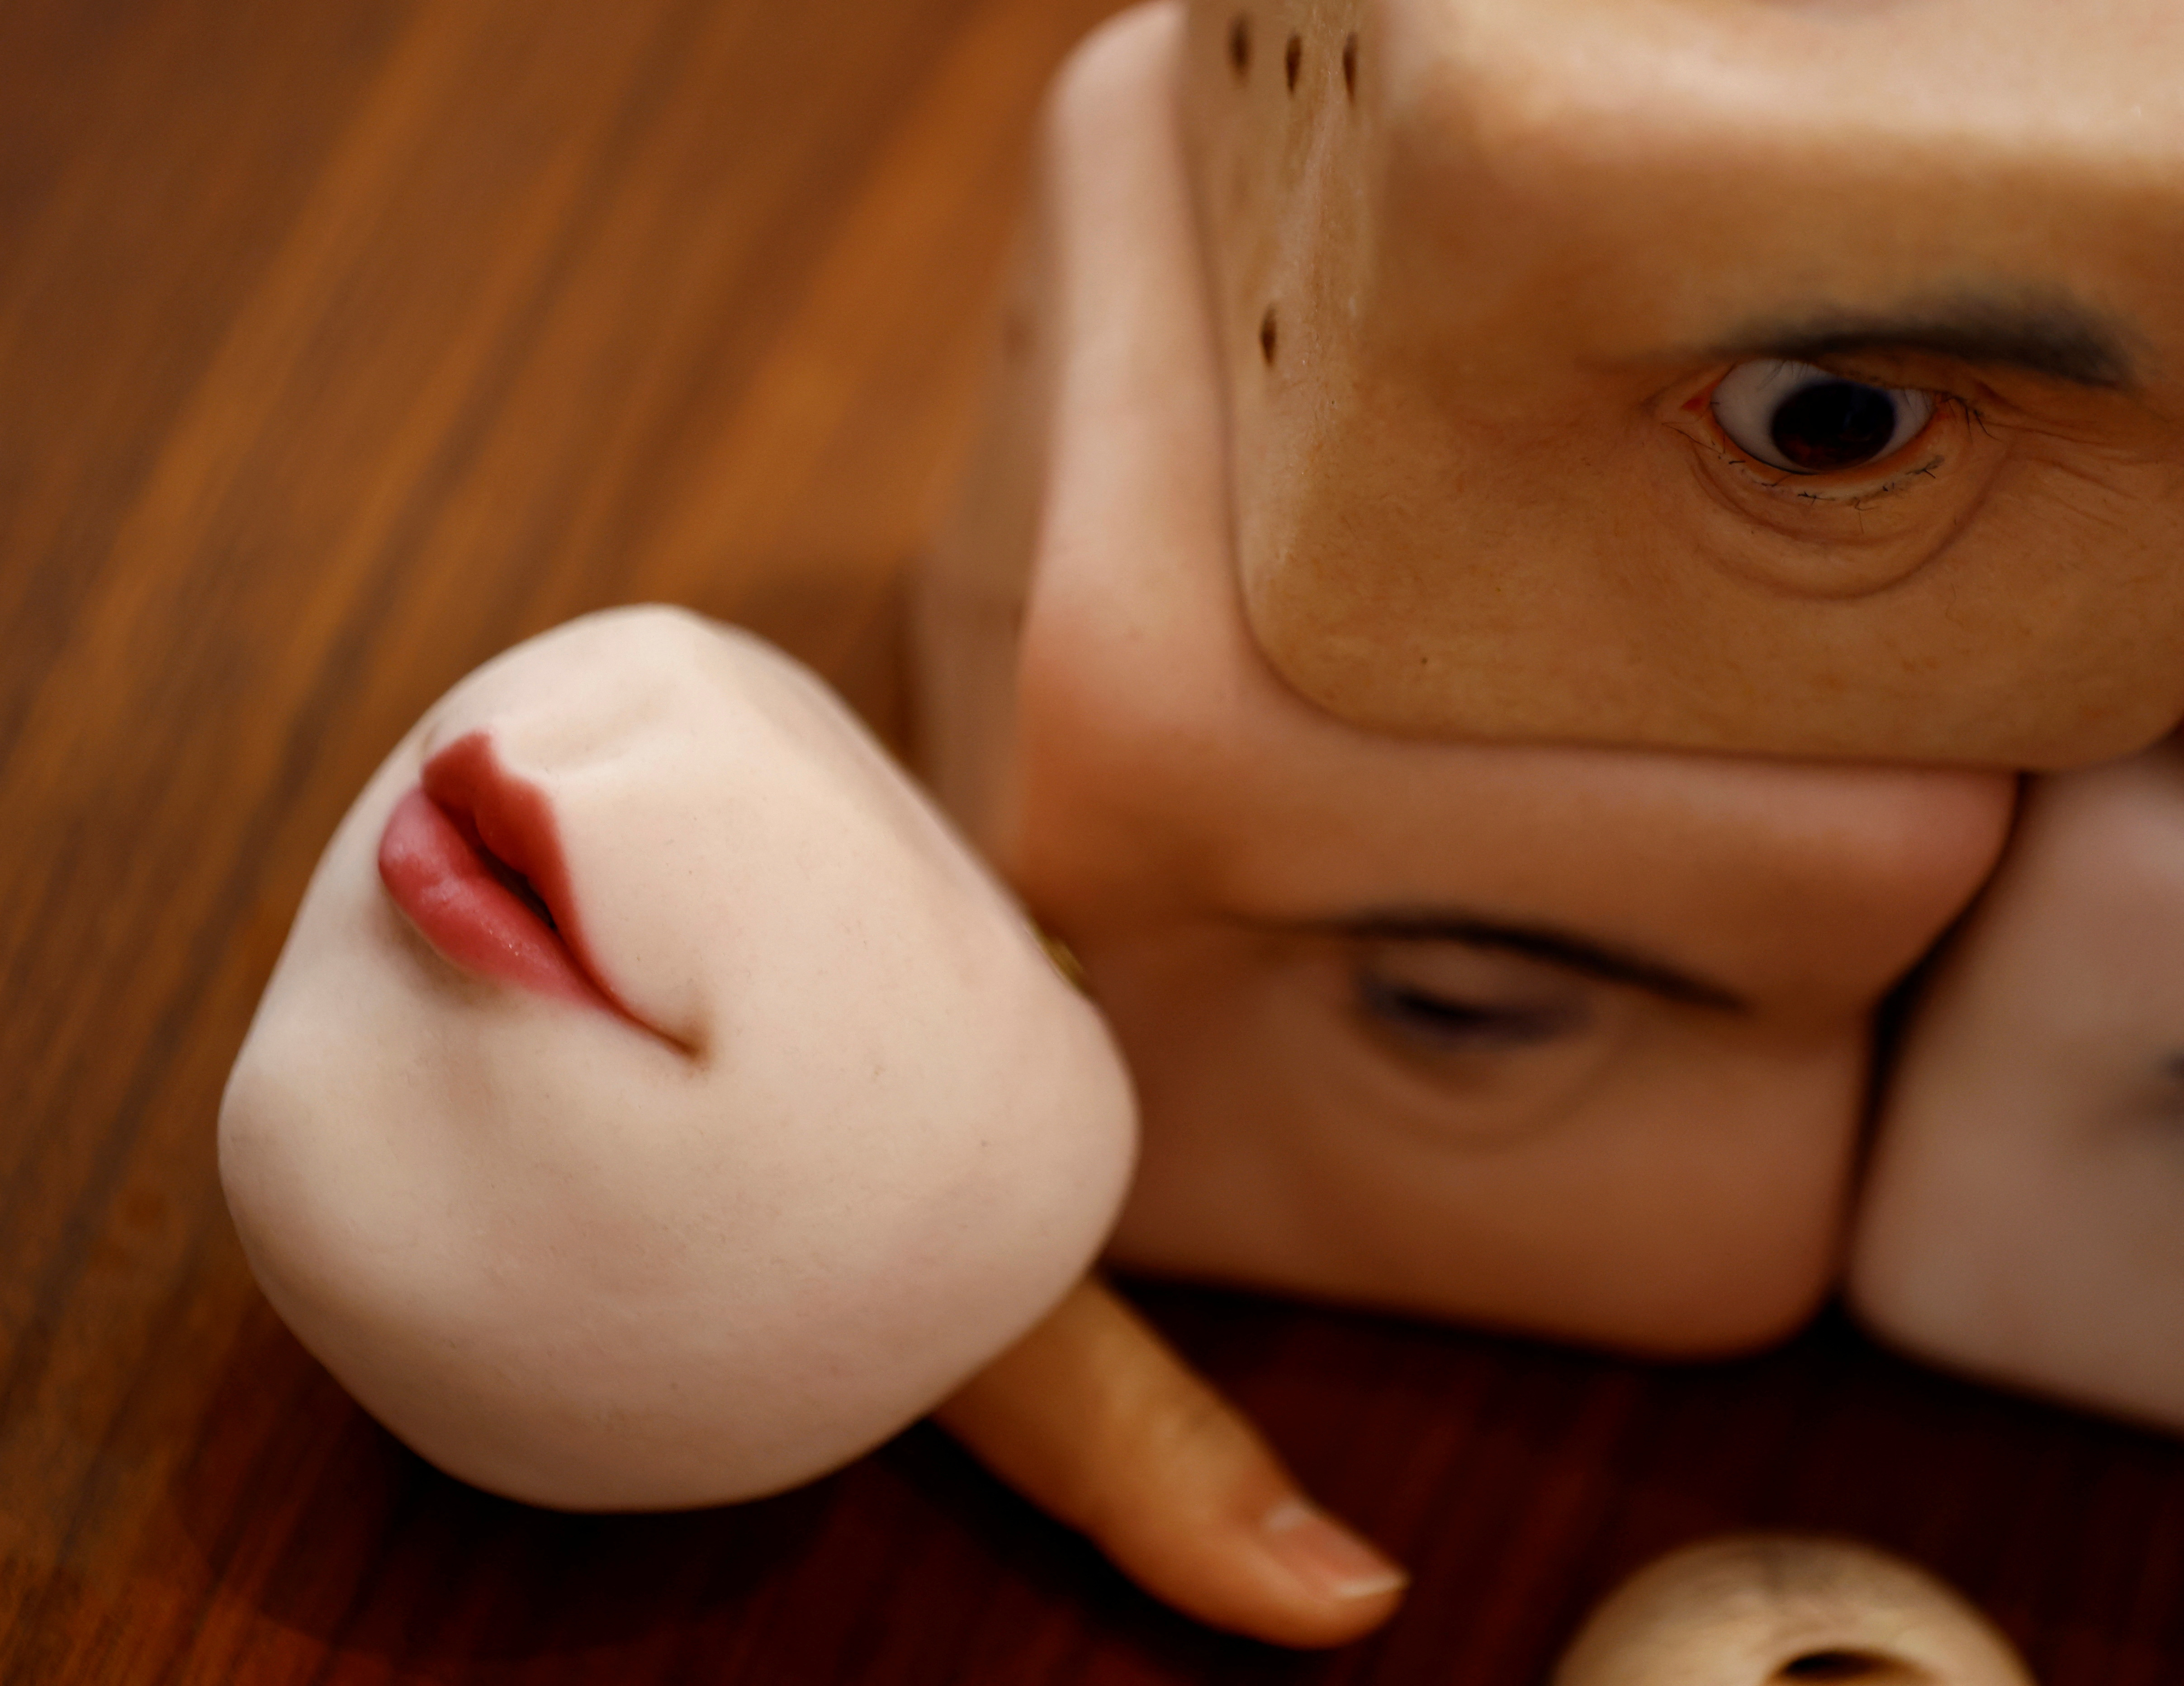 Hyper realistic flesh-like objects by Masataka Shishido, known as DJ Doooo, in Japan